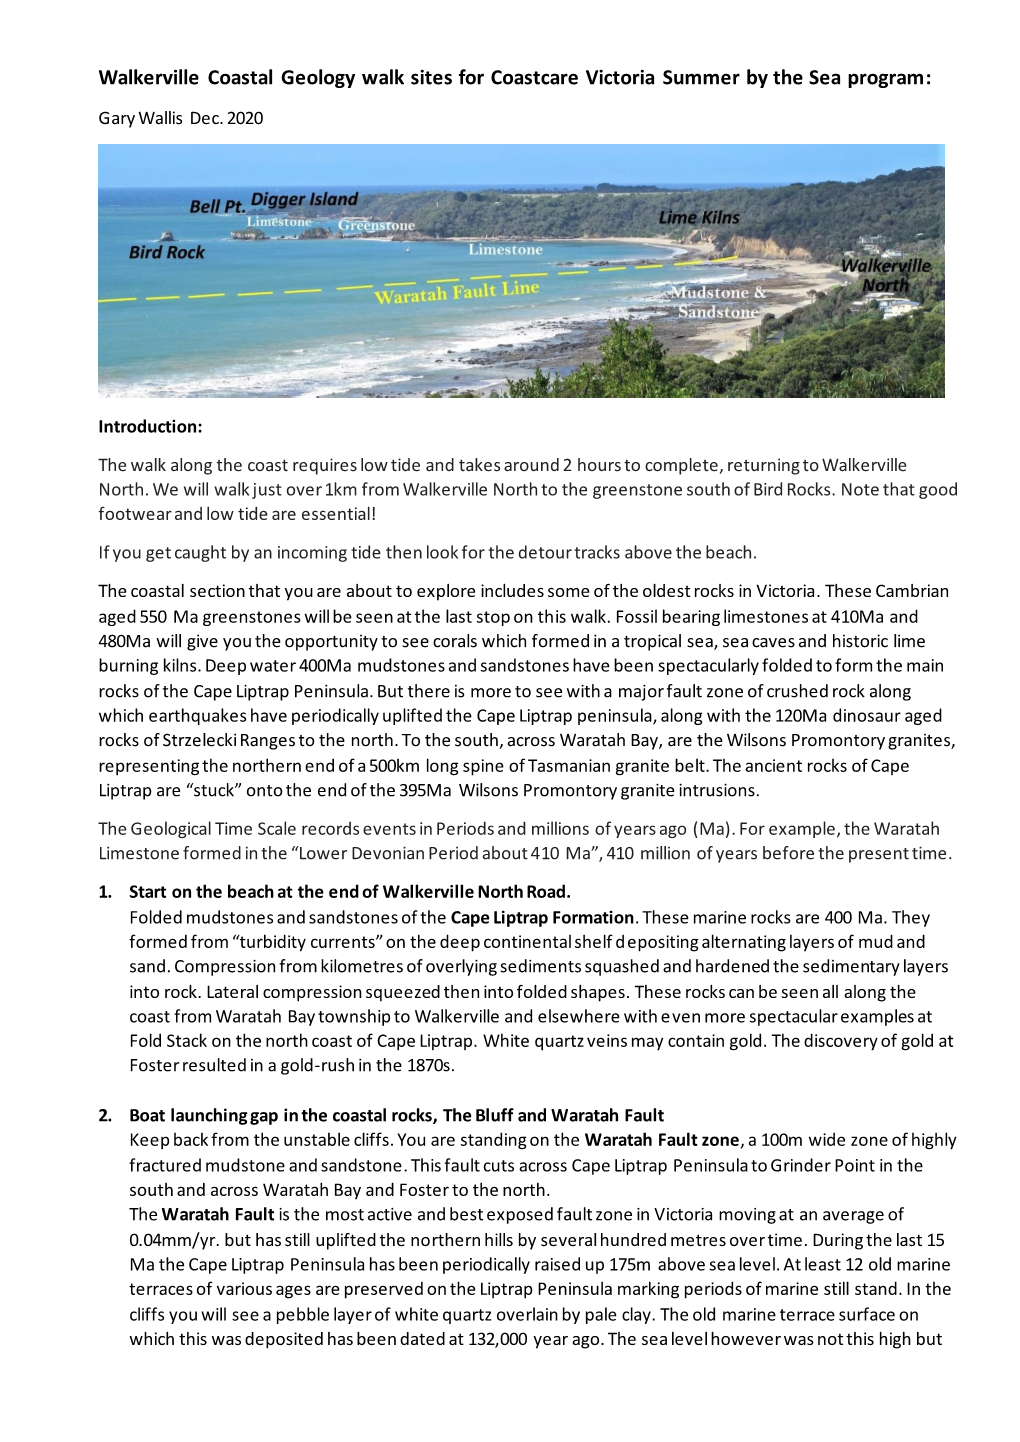 Walkerville Coastal Geology Walk Sites for Coastcare Victoria Summer by the Sea Program